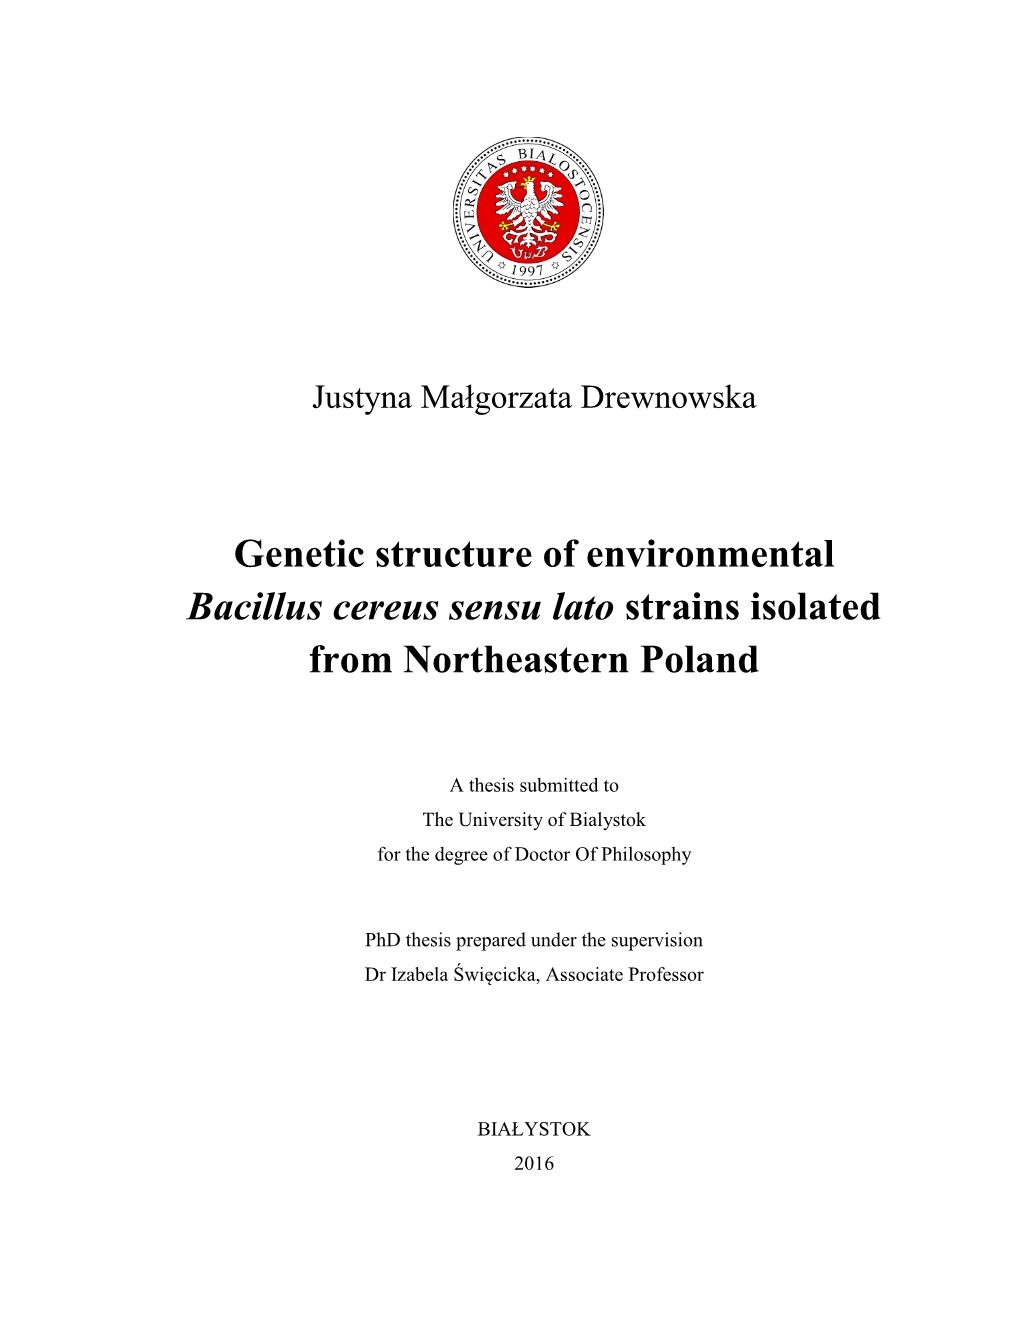 Genetic Structure of Environmental Bacillus Cereus Sensu Lato Strains Isolated from Northeastern Poland